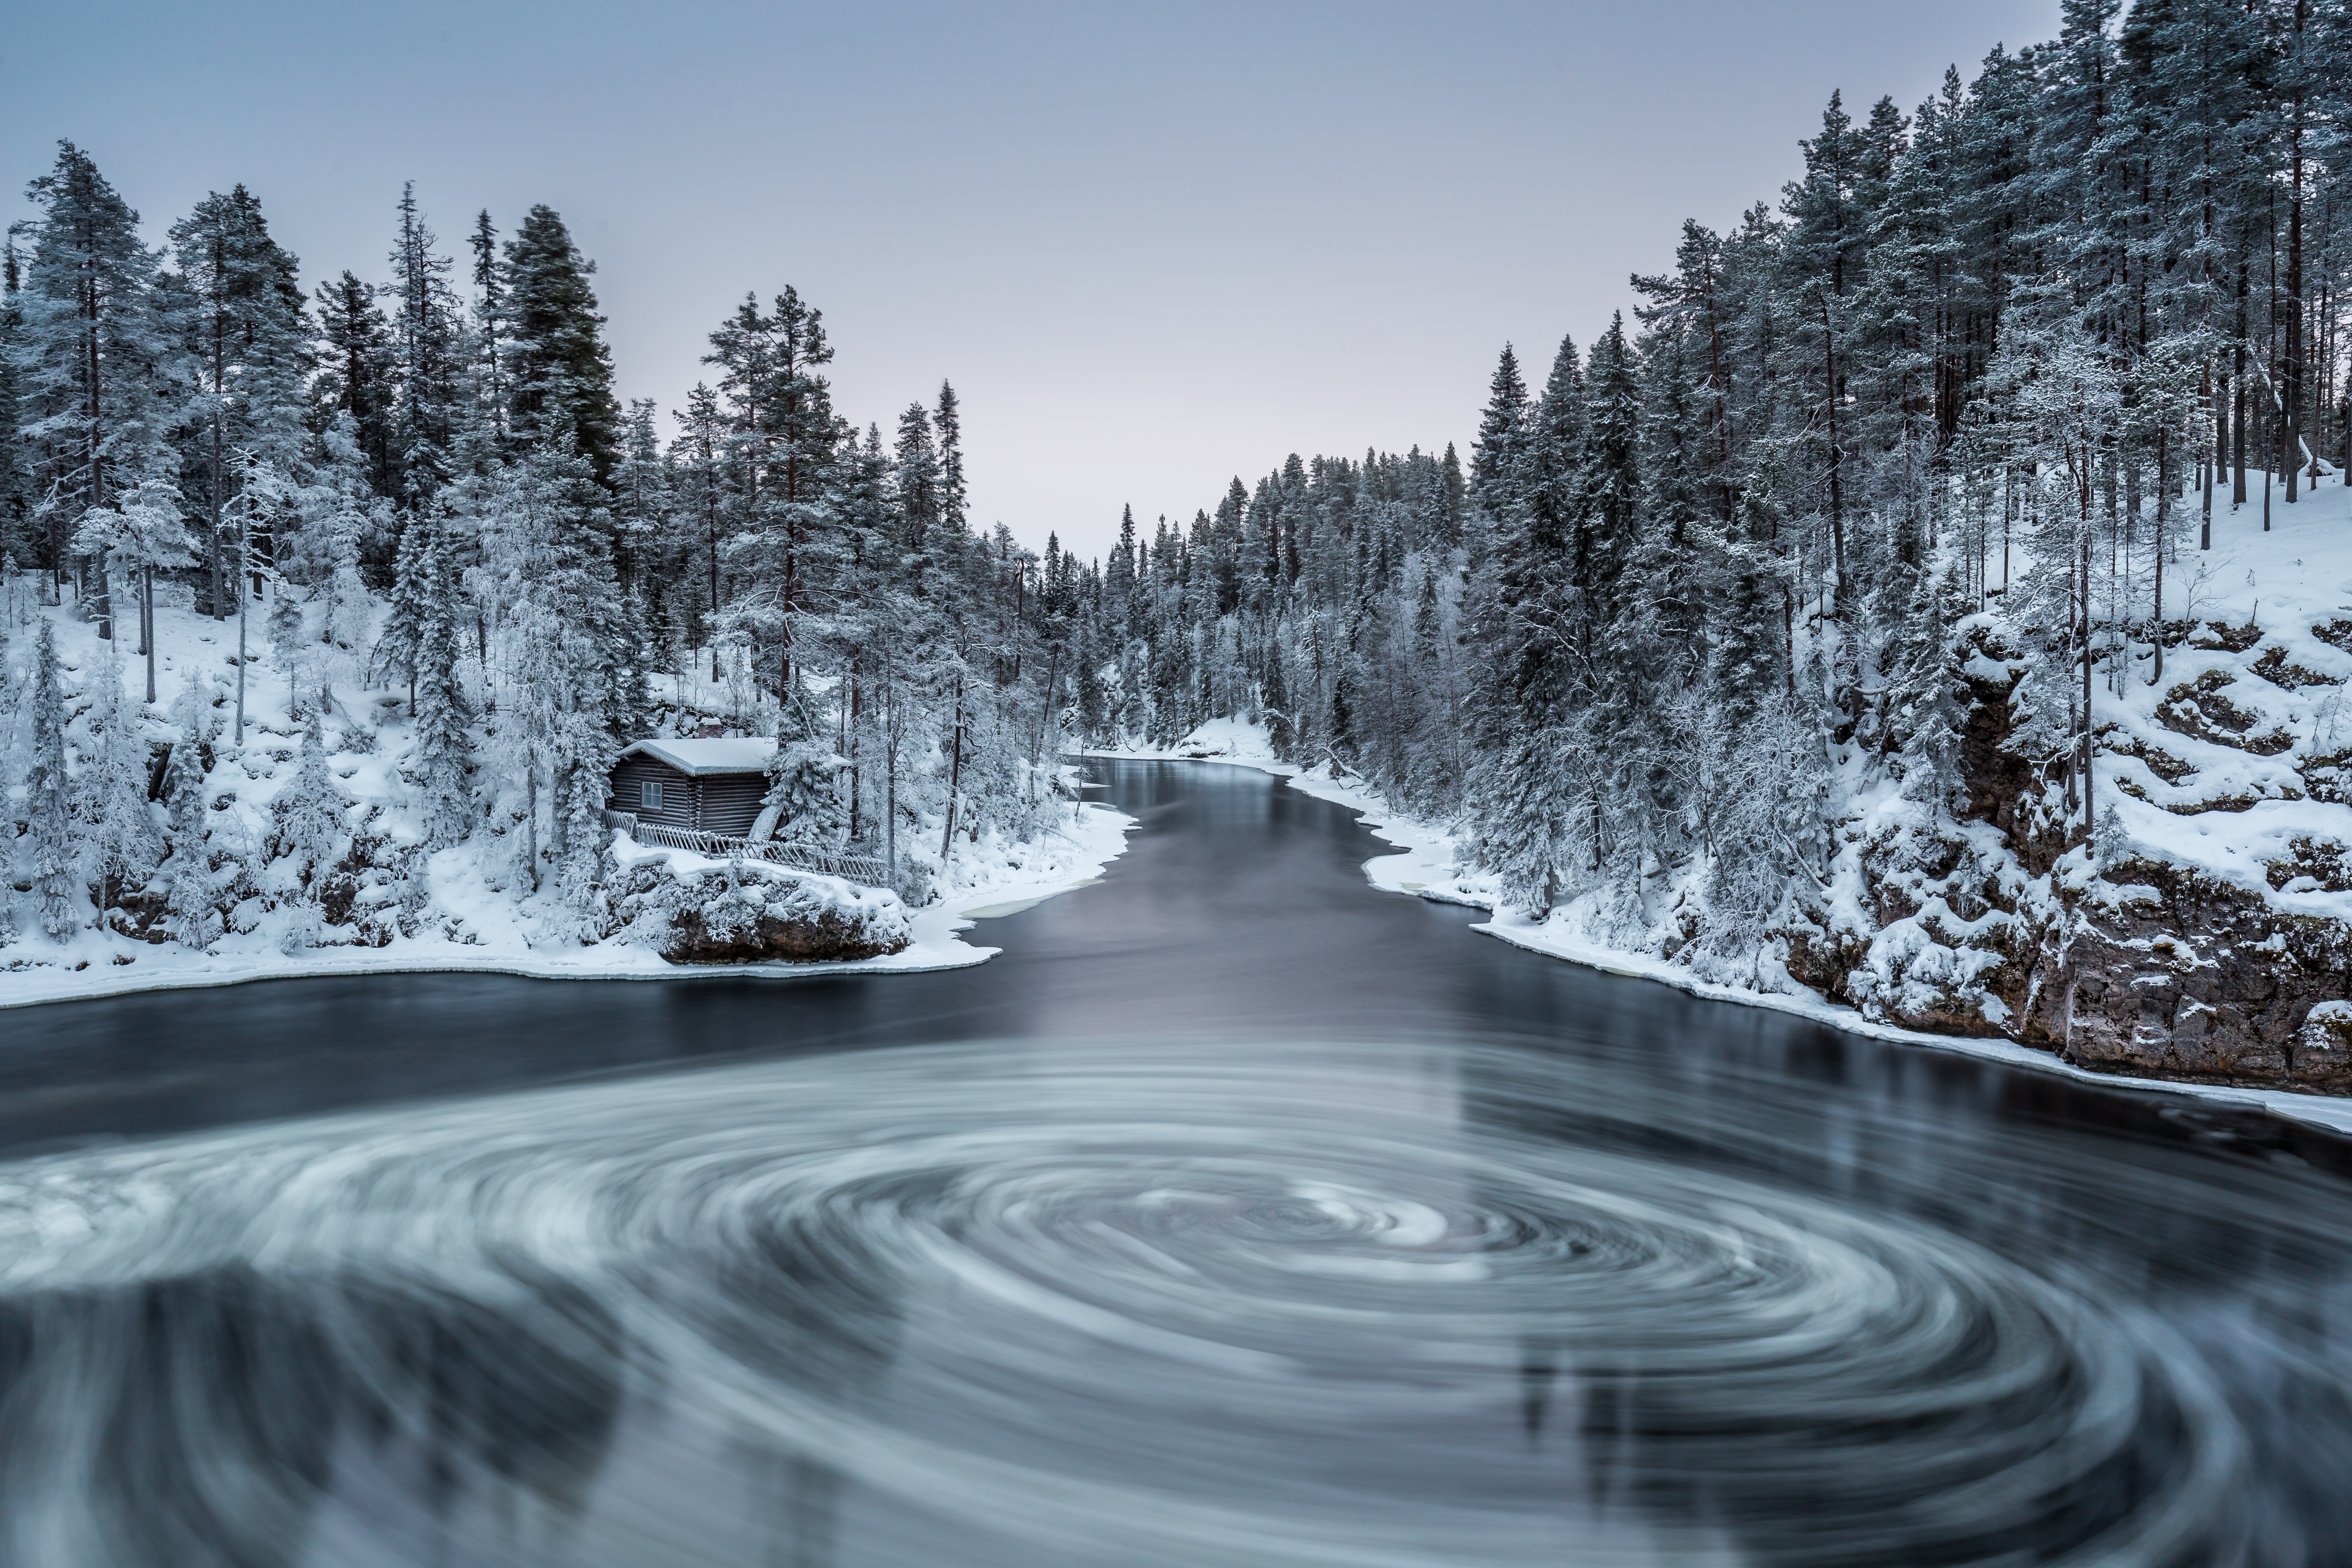 Бесплатное фото Водоворот в озере со снежными берегами